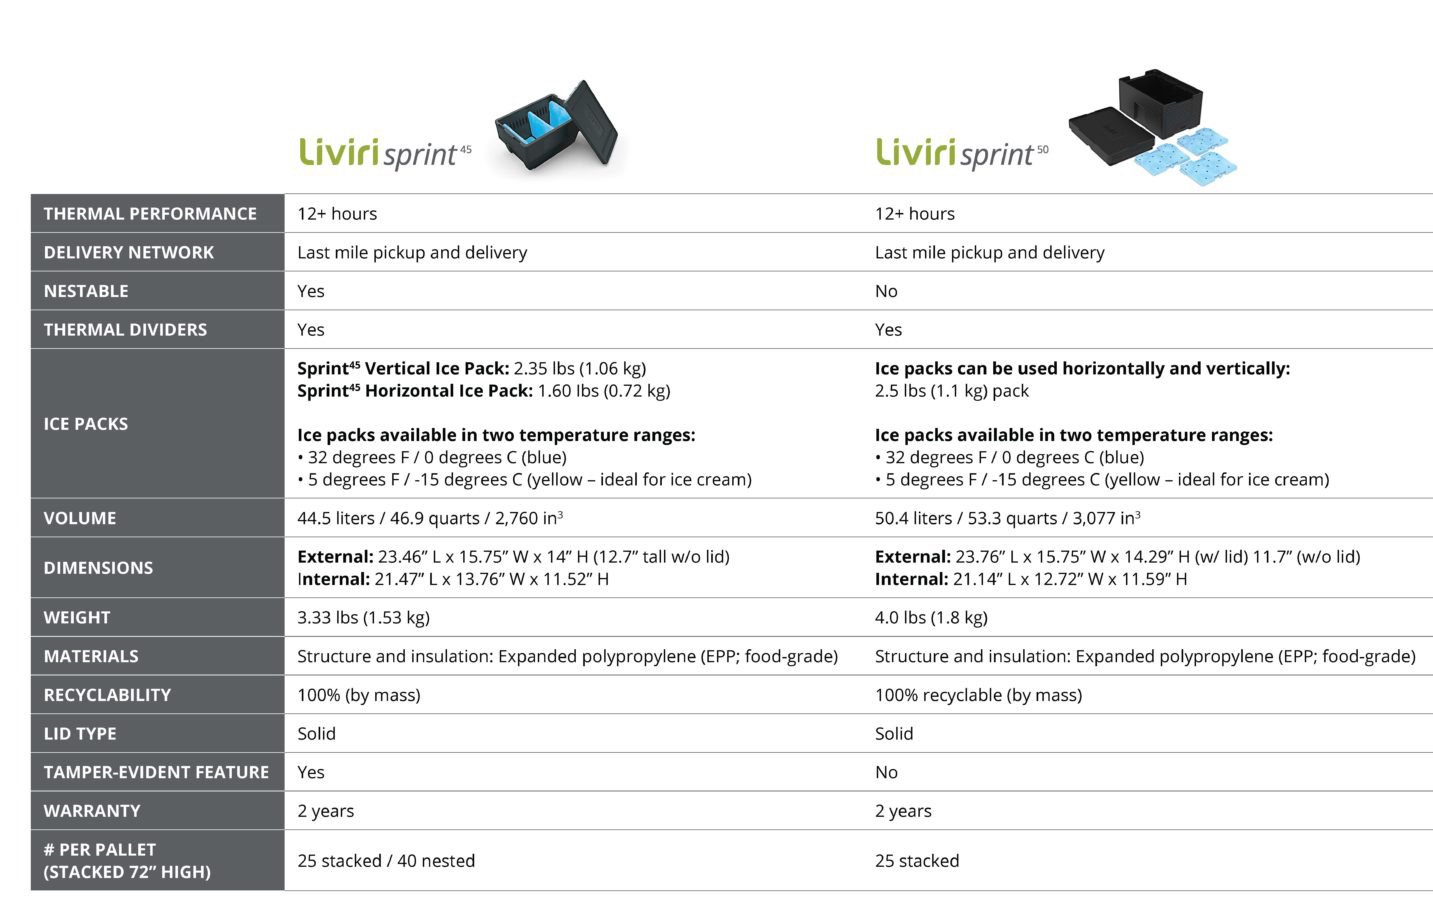 Liviri Sprint comparison